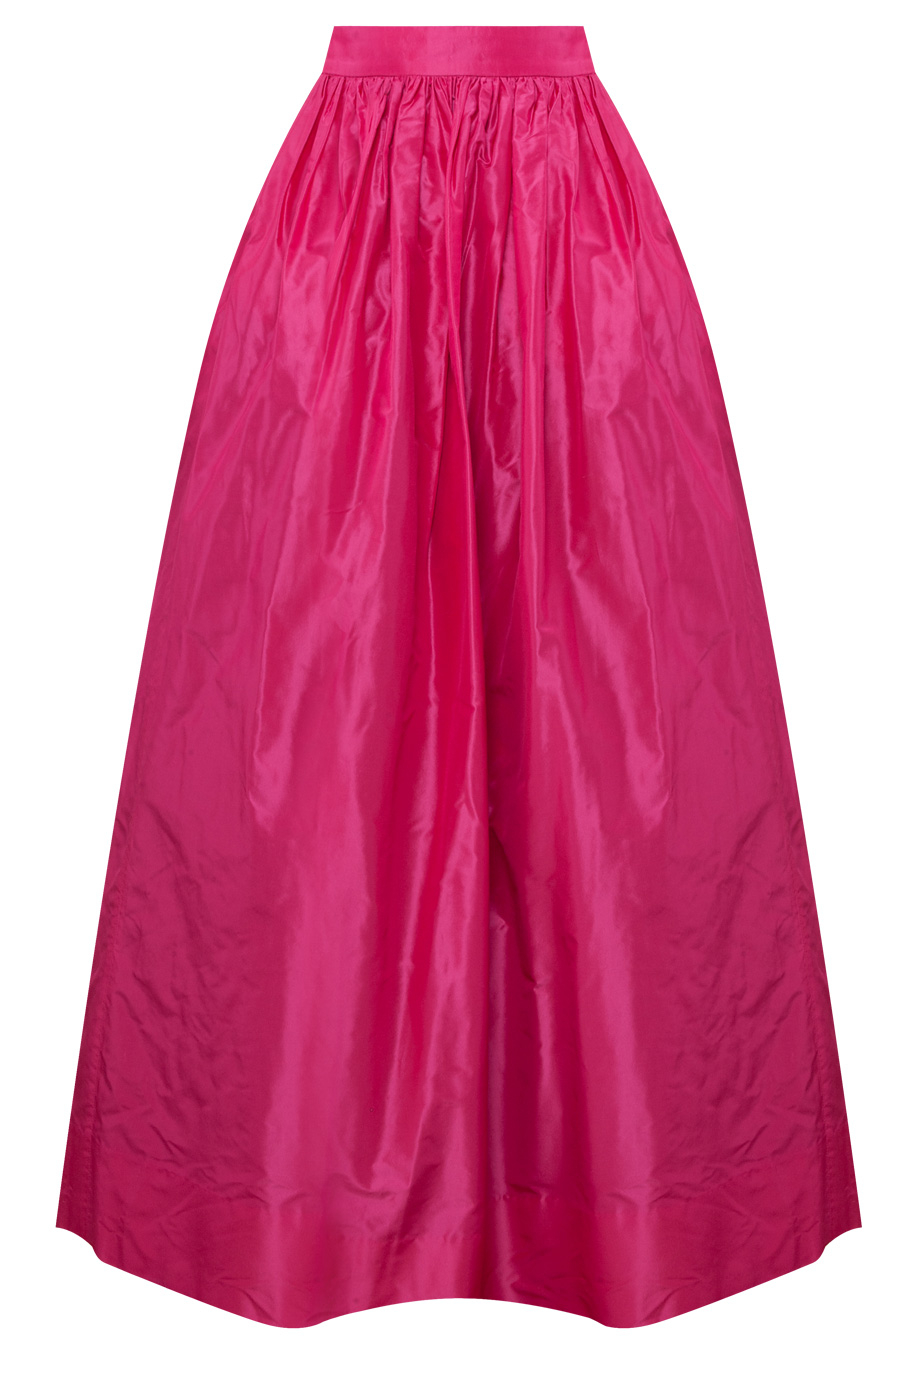 Lyst - Martin Grant Long Taffeta Ball Skirt in Pink